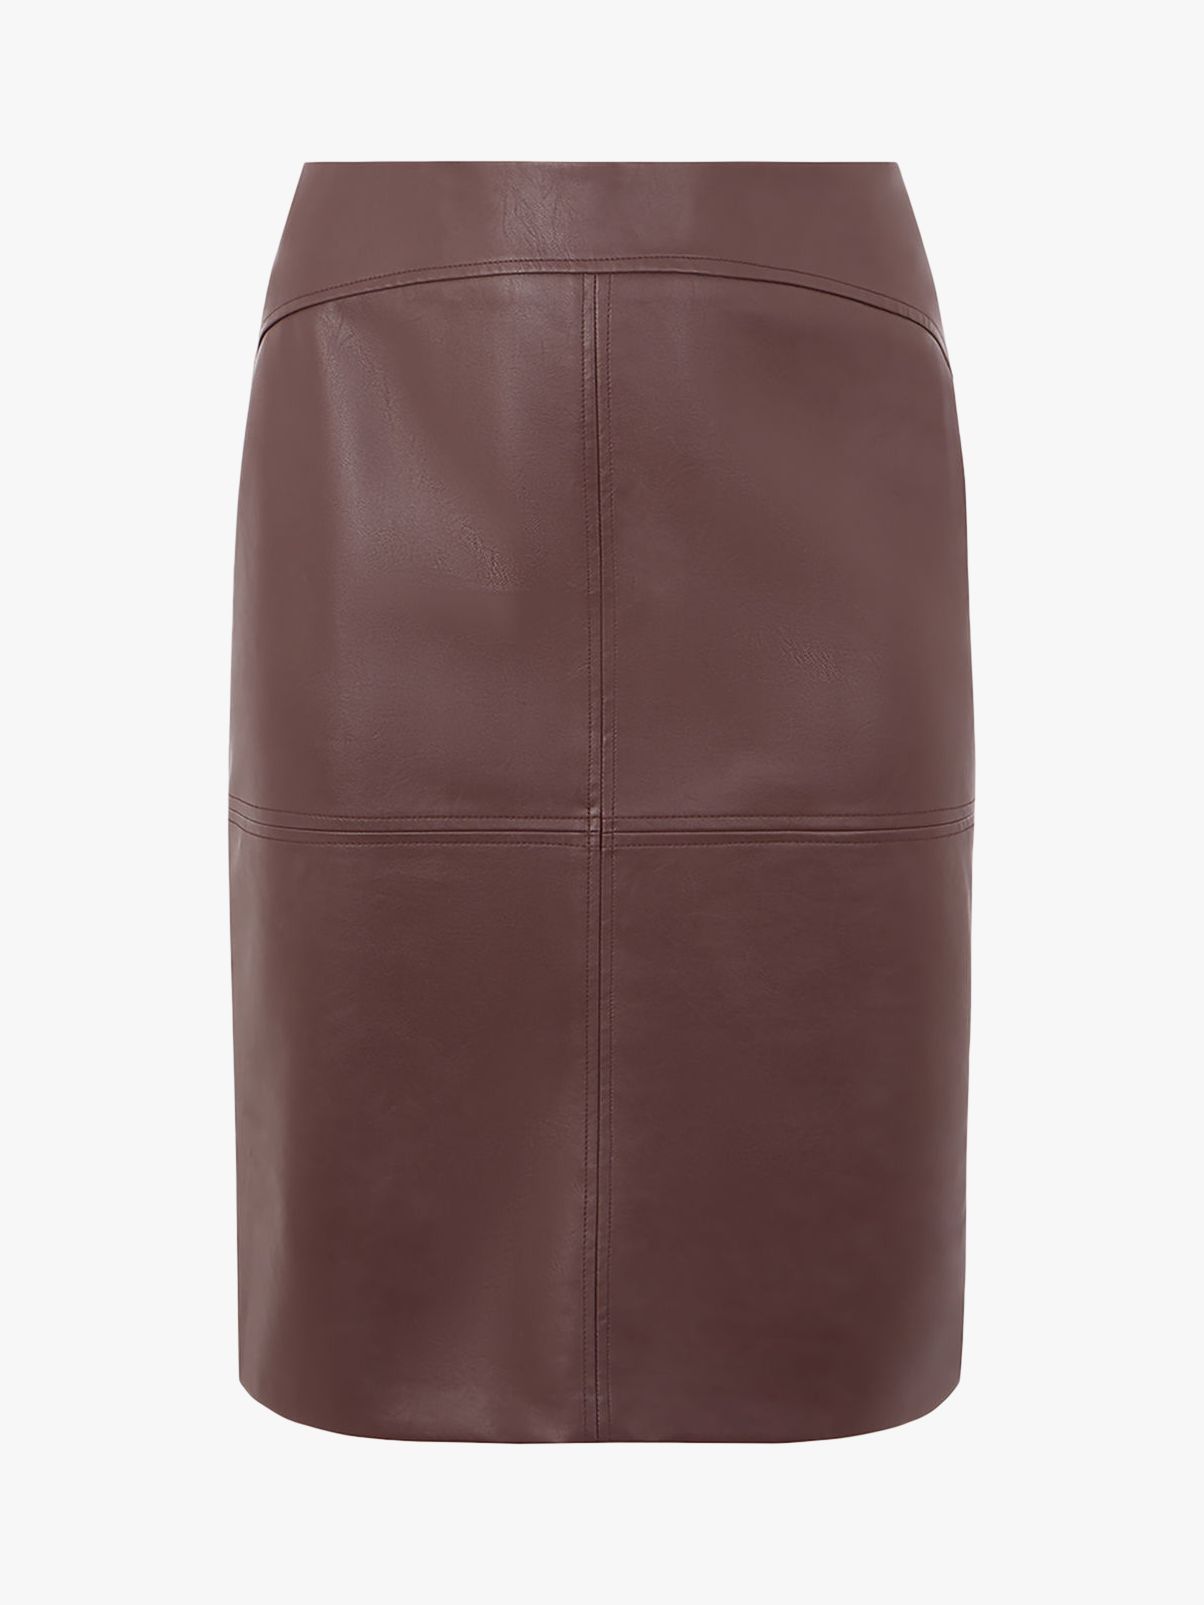 maroon leather pencil skirt